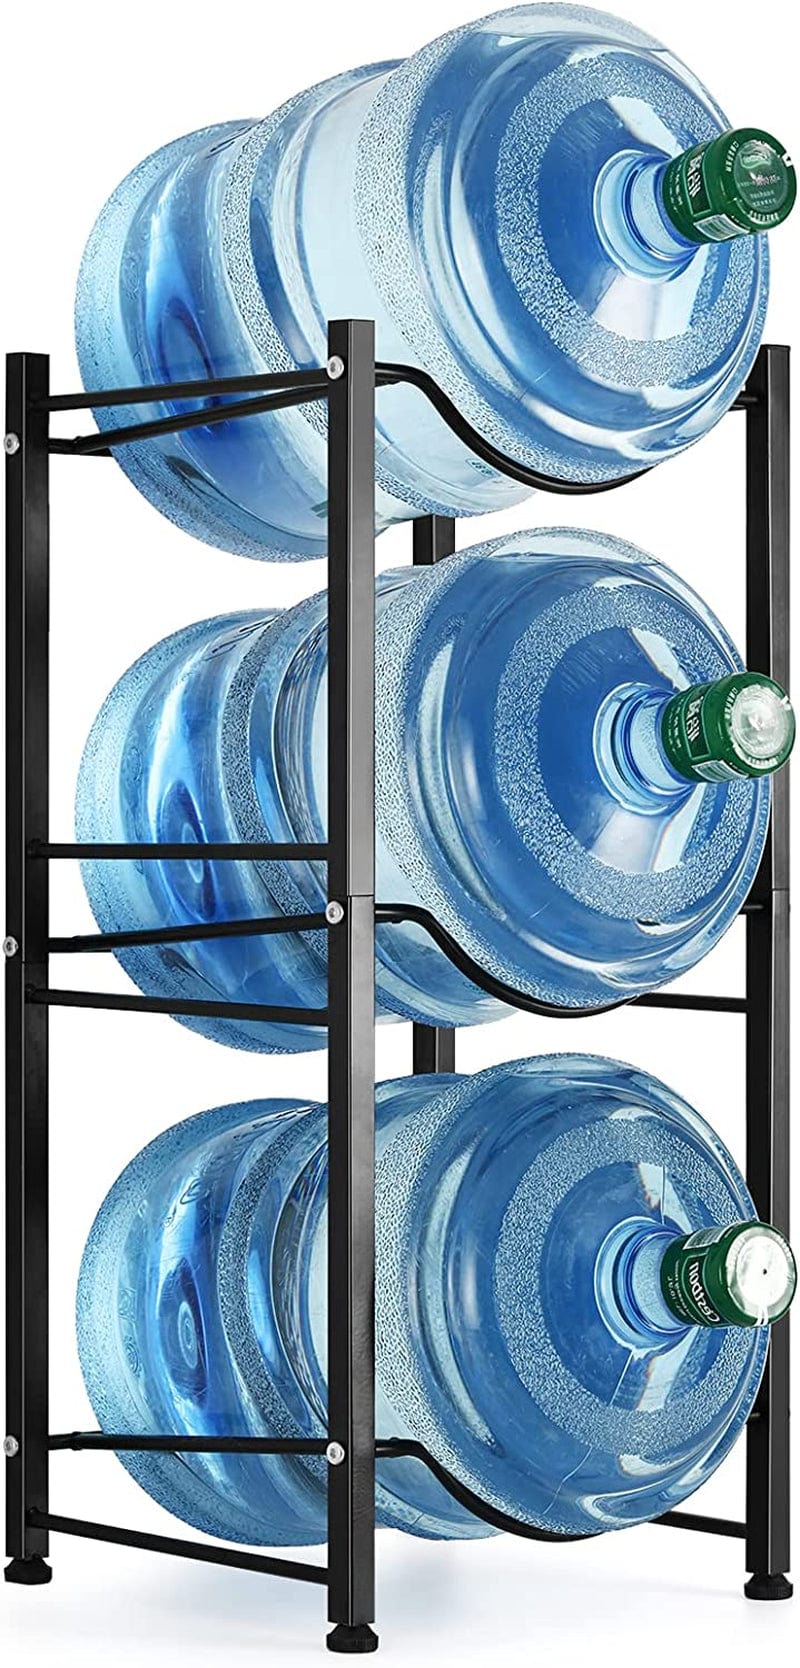 5 Gallon Water Bottle Holder 3 Tier Water Cooler Jug Rack Shelf Organizer Detachable Heavy Duty Kitchen Water Bottle Storage Rack for Home, Office, Black Home & Garden > Decor > Decorative Jars smusei Black  